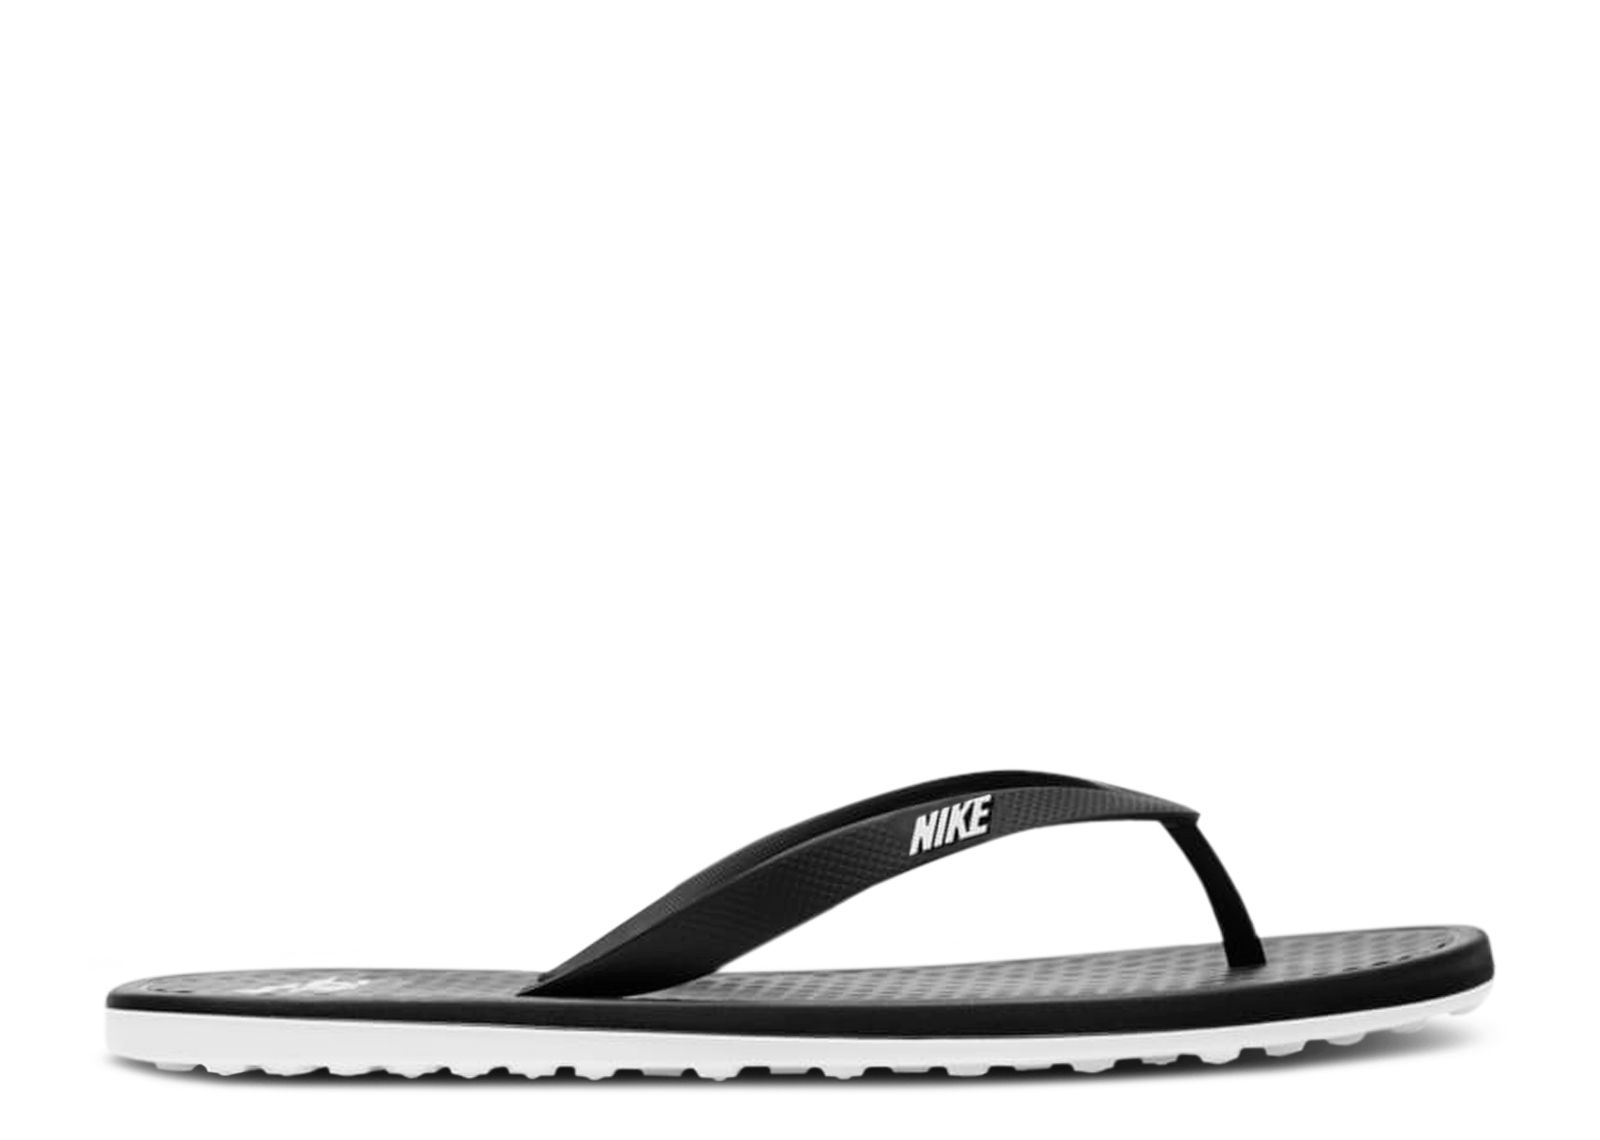 Wmns On Deck 'Black White' - Nike - CU3959 002 - black/black/white